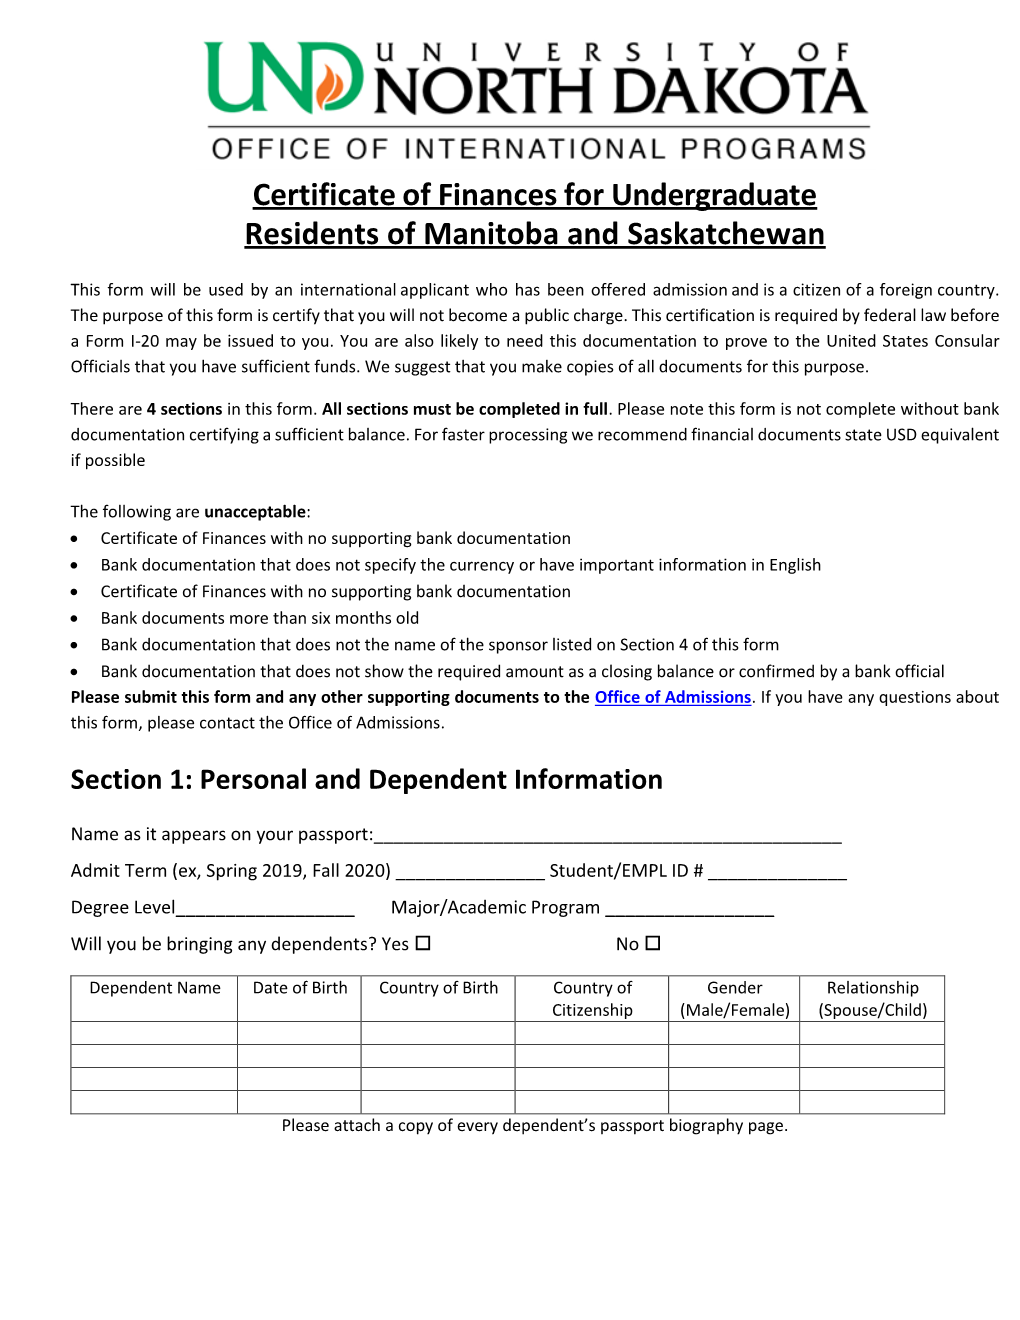 Certificate of Finances for Undergraduate Residents of Manitoba and Saskatchewan